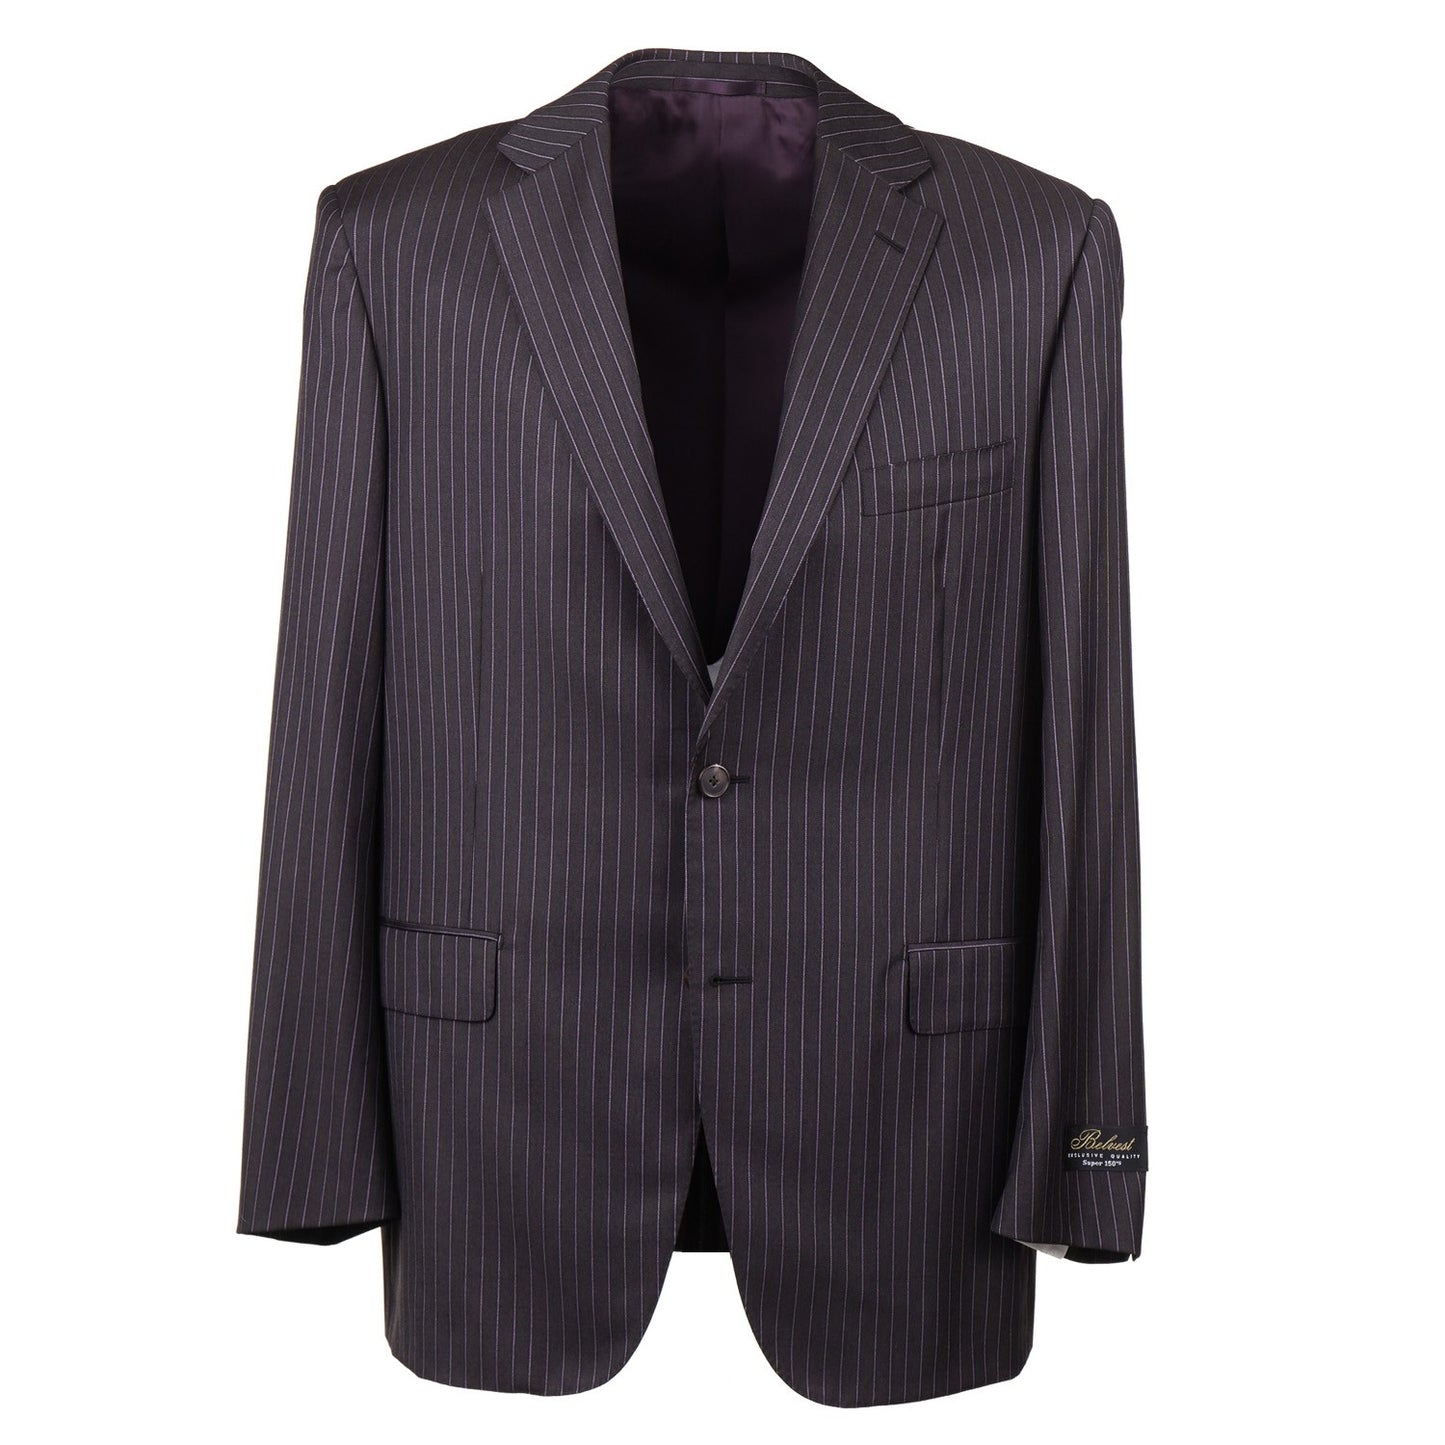 Belvest Regular-Fit Super 150s Wool Suit - Top Shelf Apparel